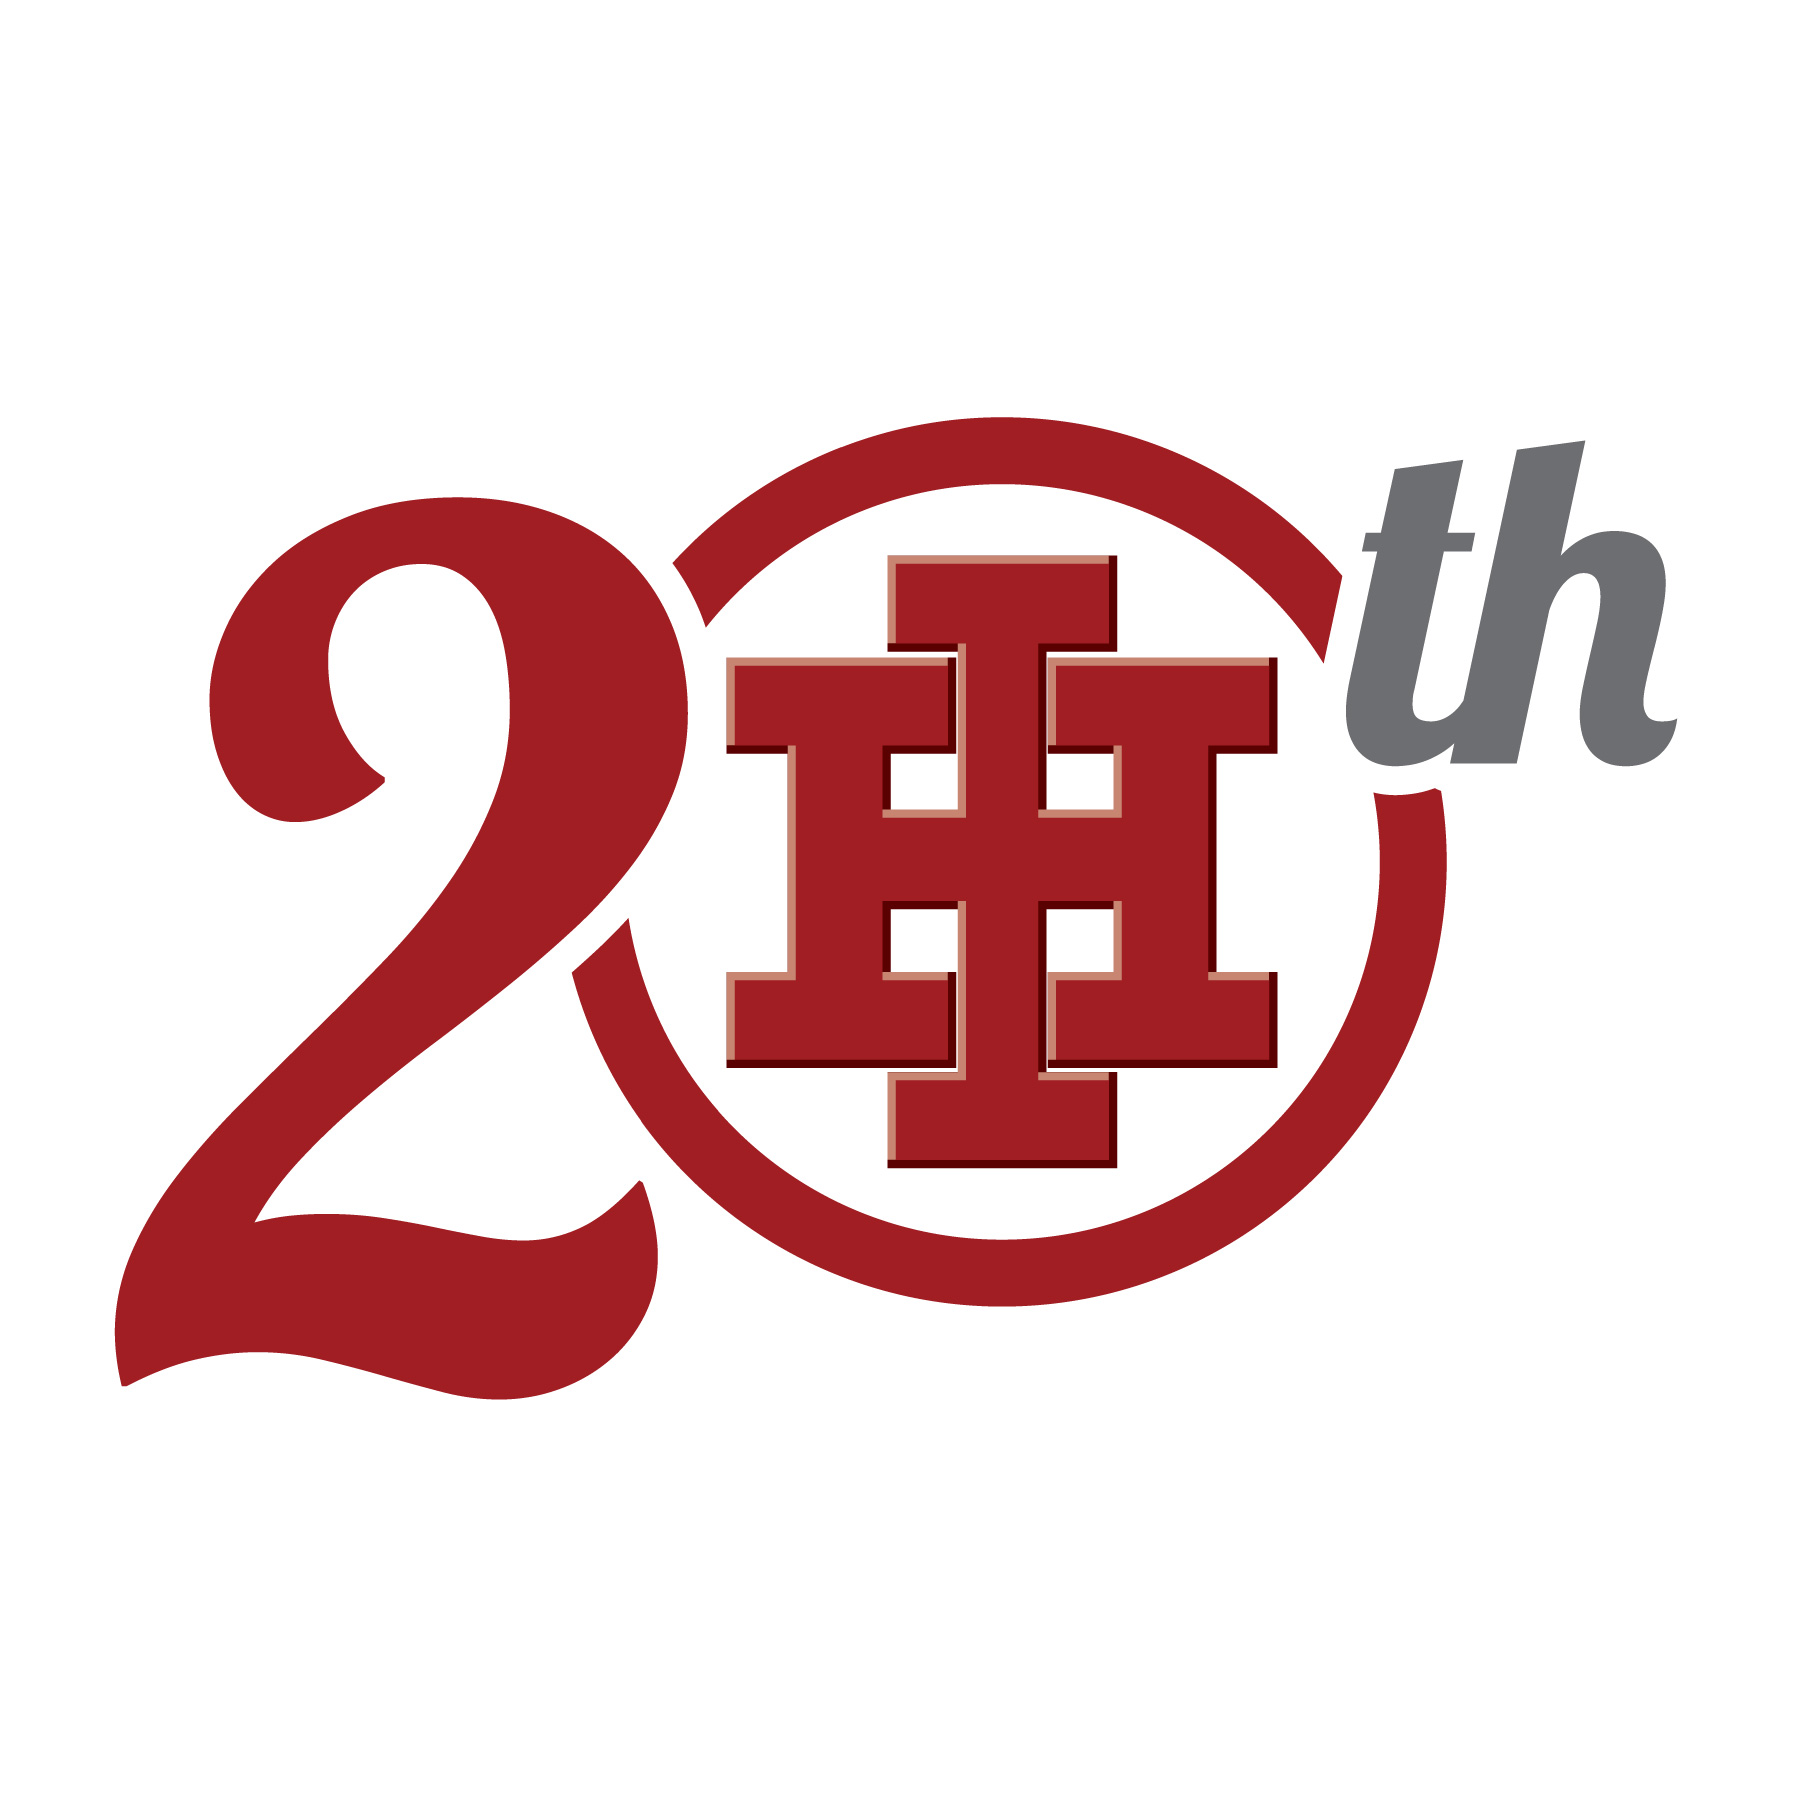 20th reunion logo